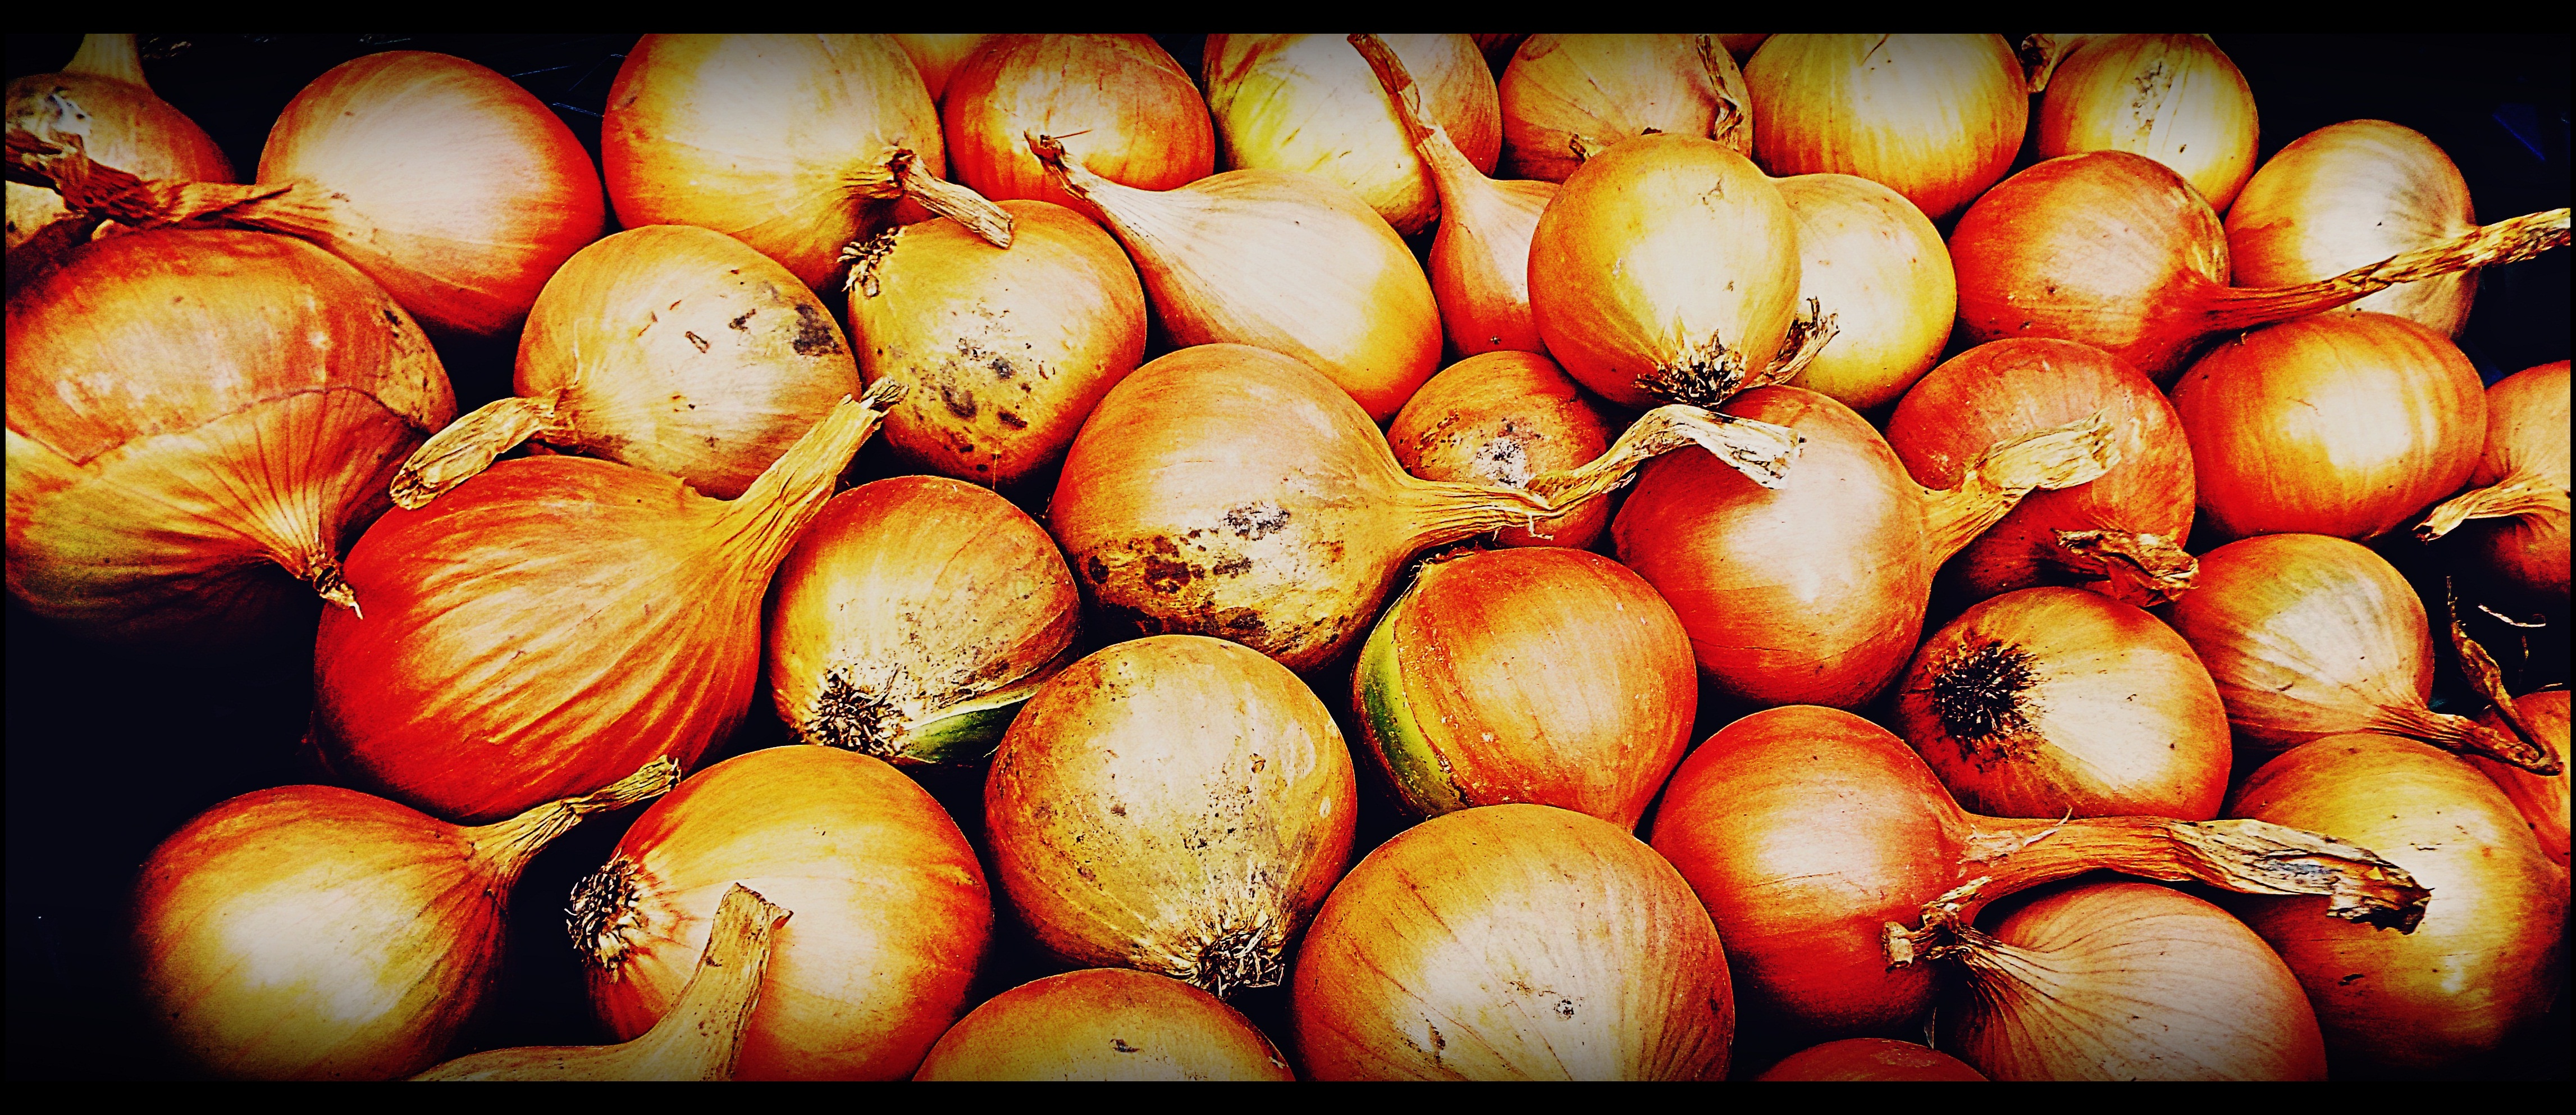 onions border.JPG